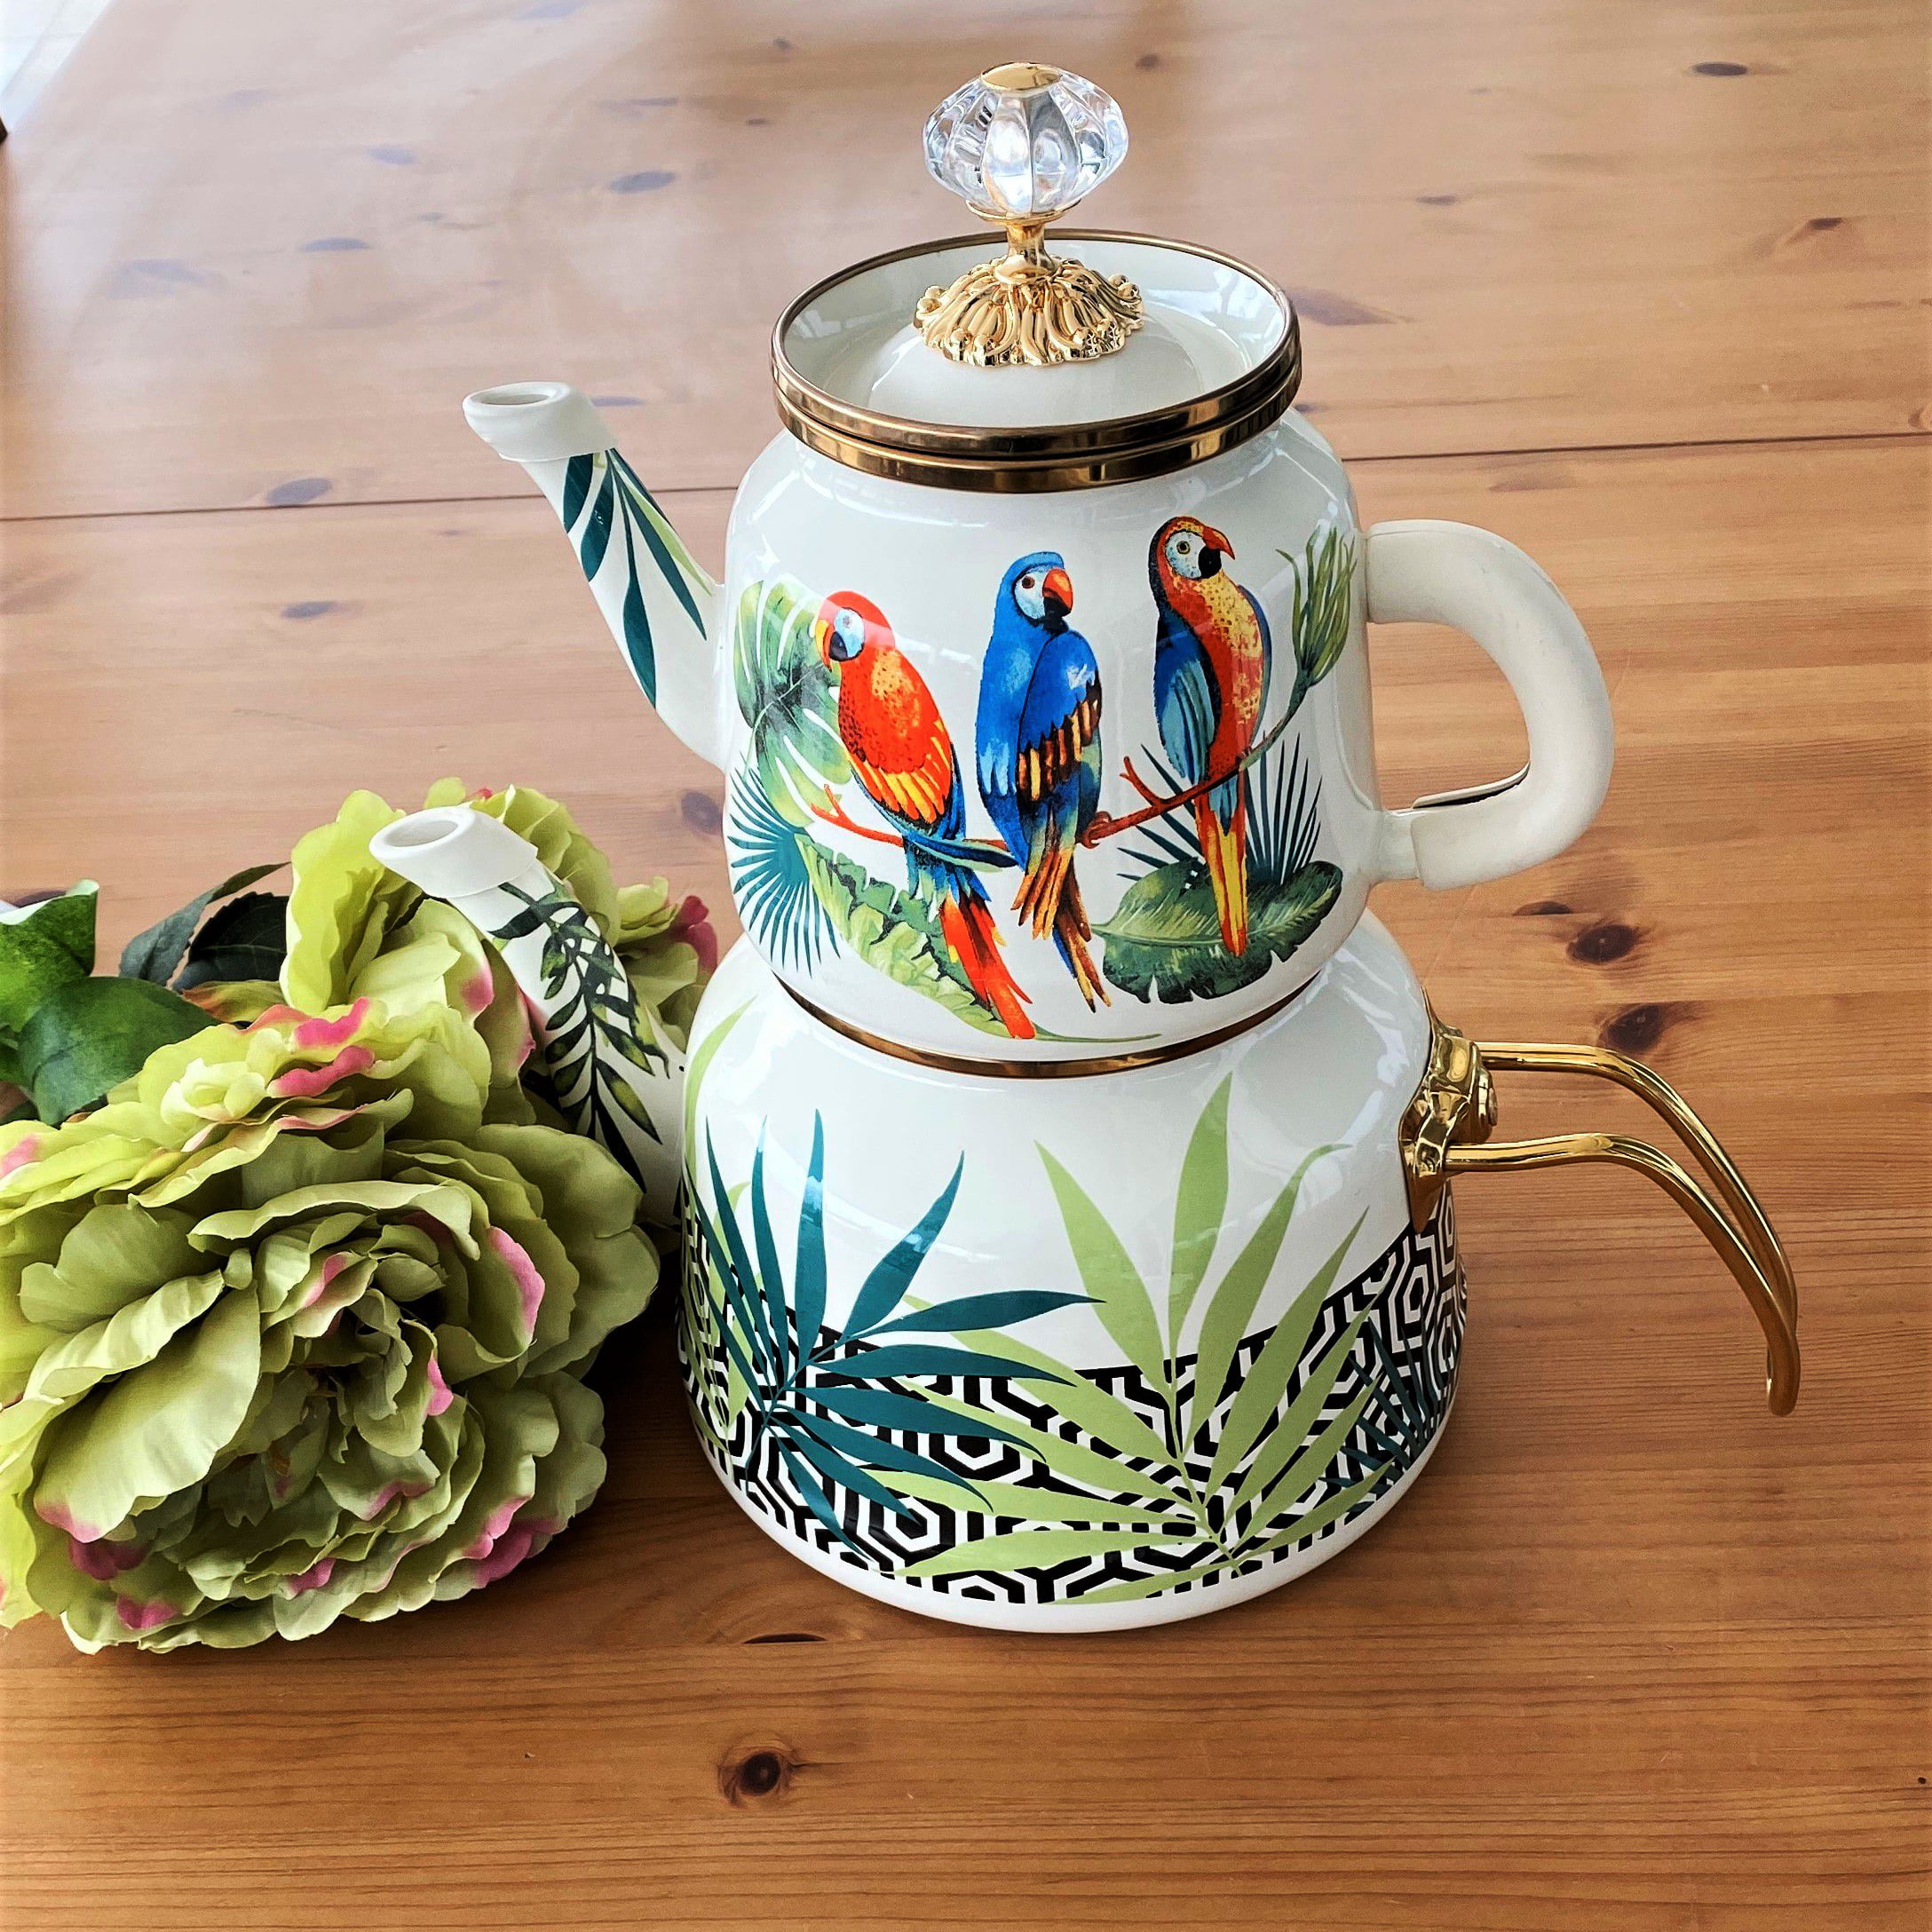 https://traditionalturk.com/wp-content/uploads/2021/08/vintage-parrot-pattern-enamel-turkish-tea-pot-kettle.jpg